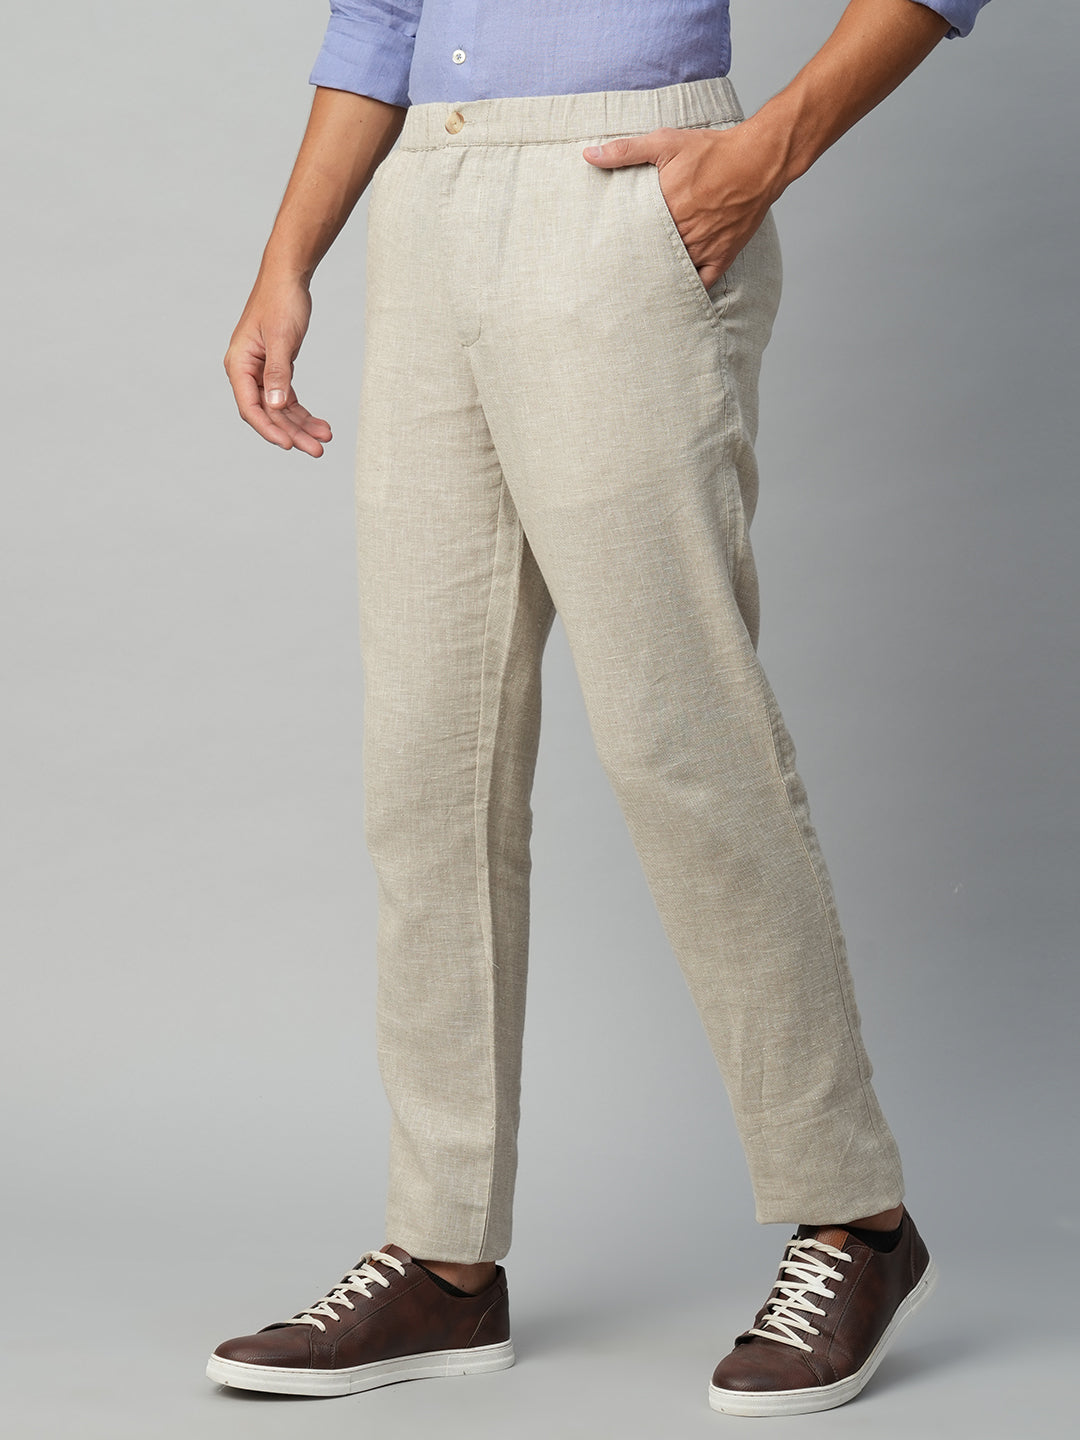 Buy COTTONWORLD Solid Cotton Linen Blend Slim Fit Mens Trousers | Shoppers  Stop